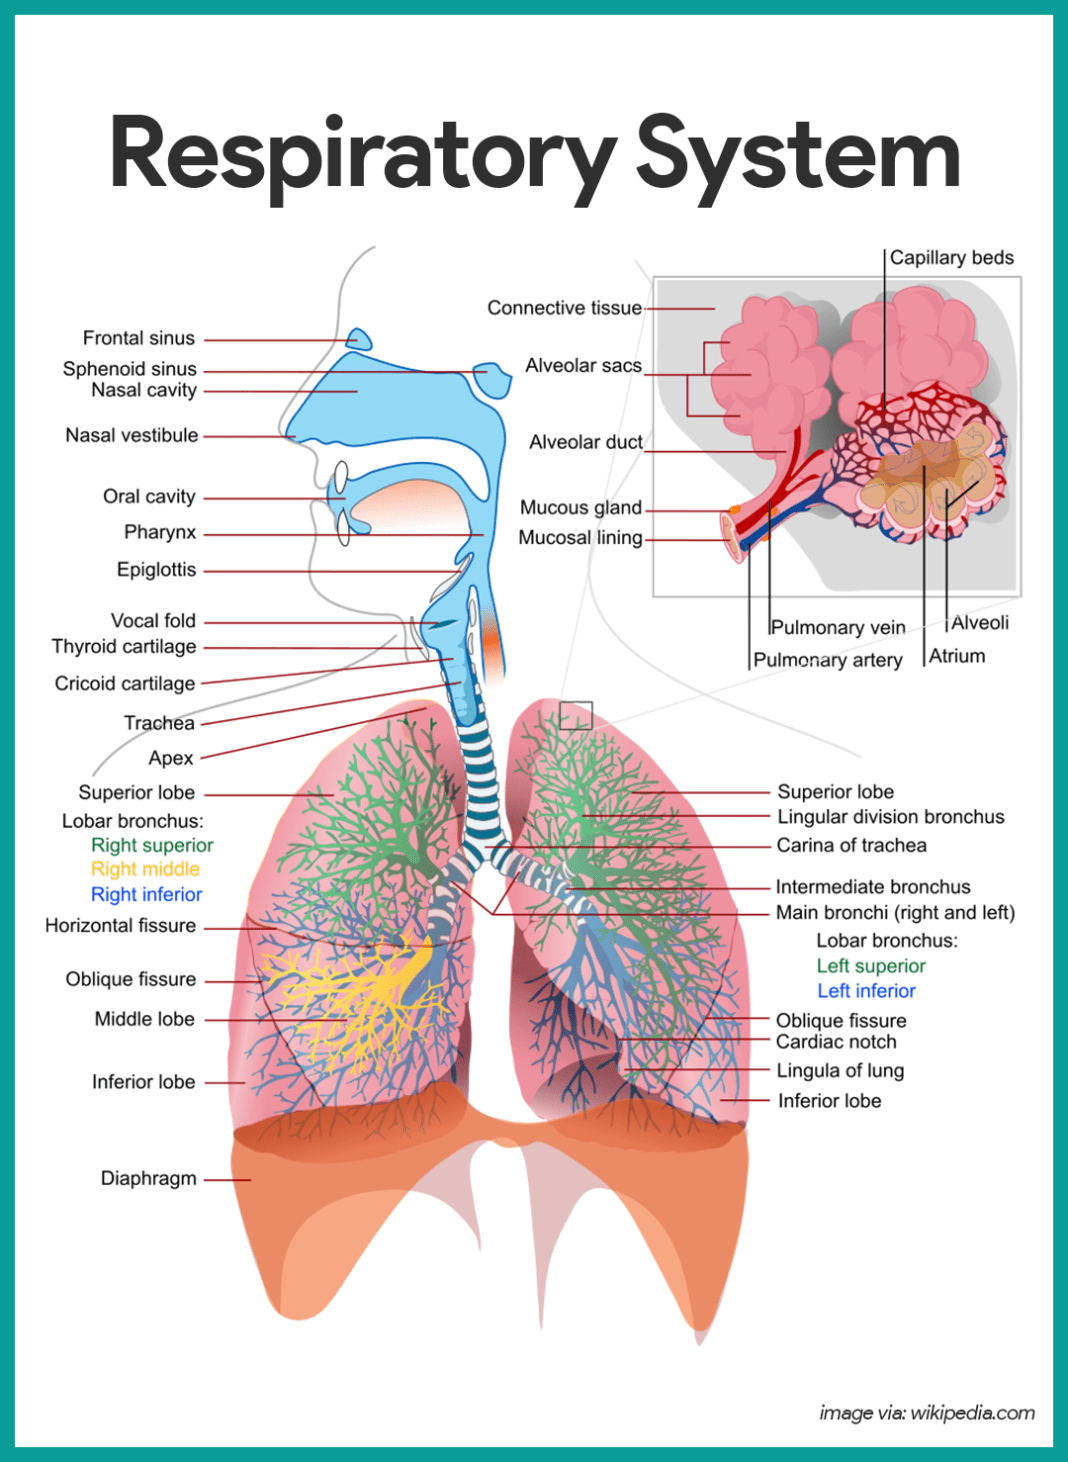 Respiratory System Anatomy and Physiology Nurseslabs